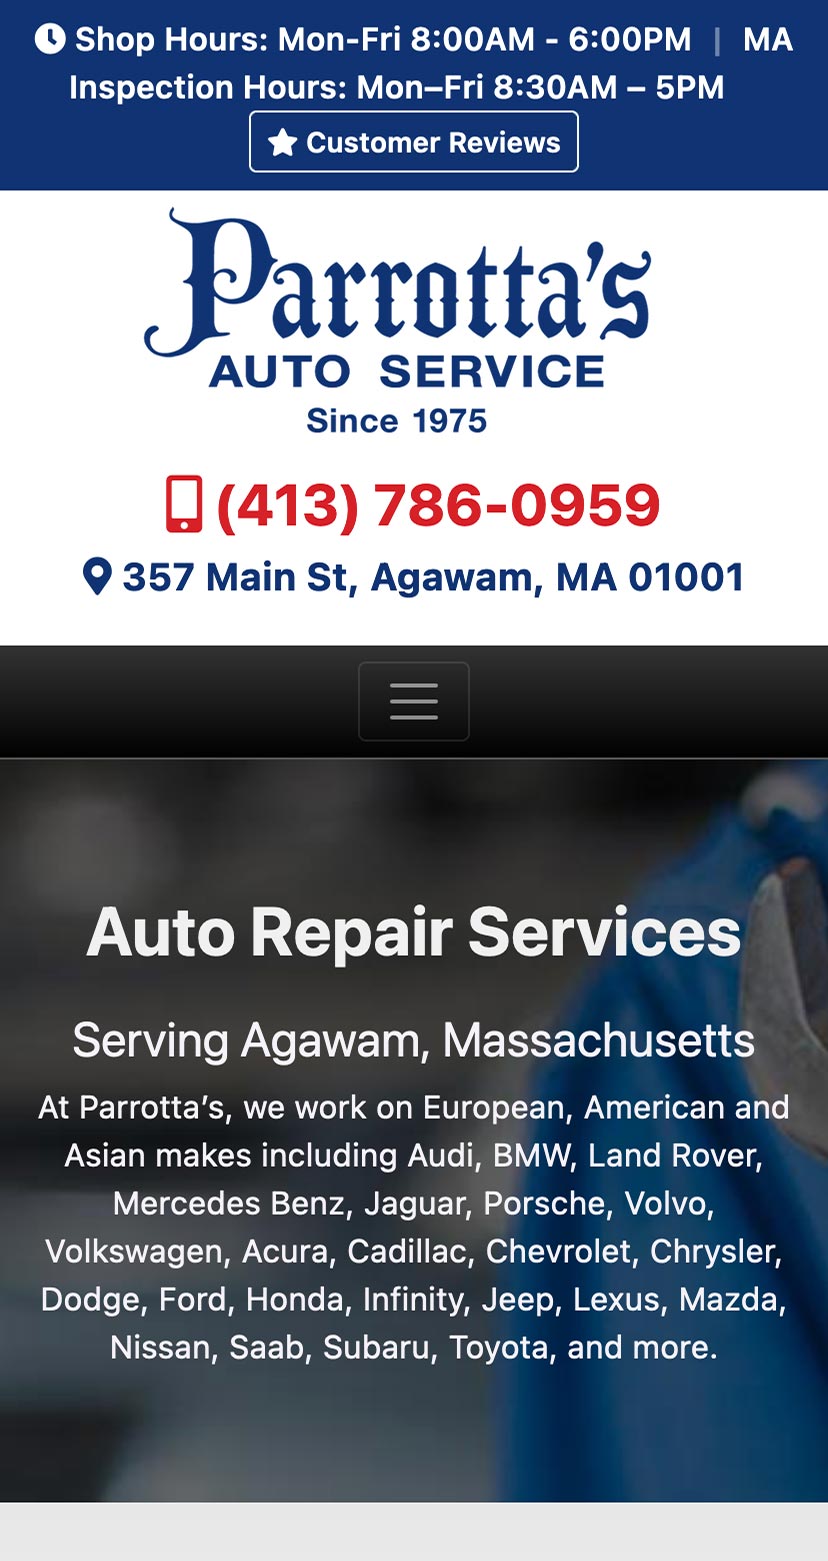 Parrotta’s Auto Service - Mobile